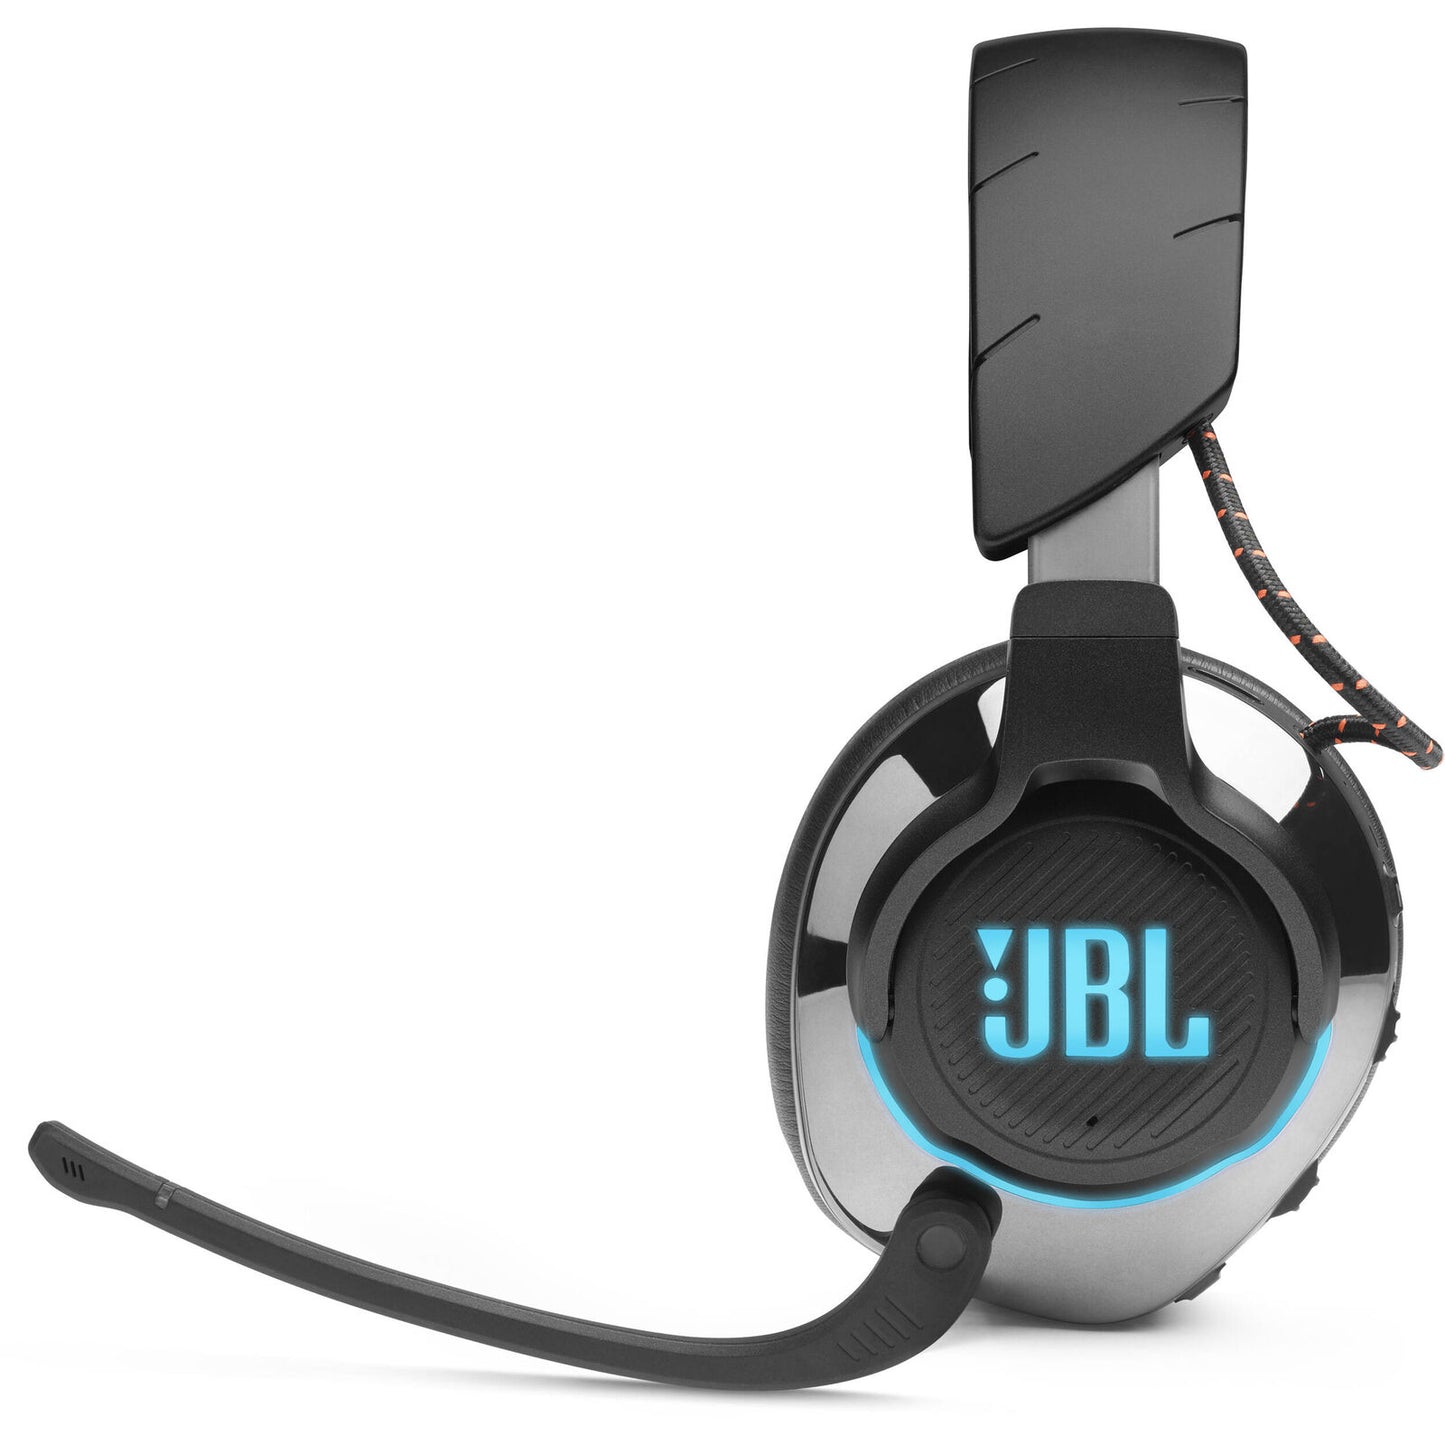 JBL Quantum 810 Wireless Gaming Headphones ((Certified - RefurbishedCertified - Refurbished))